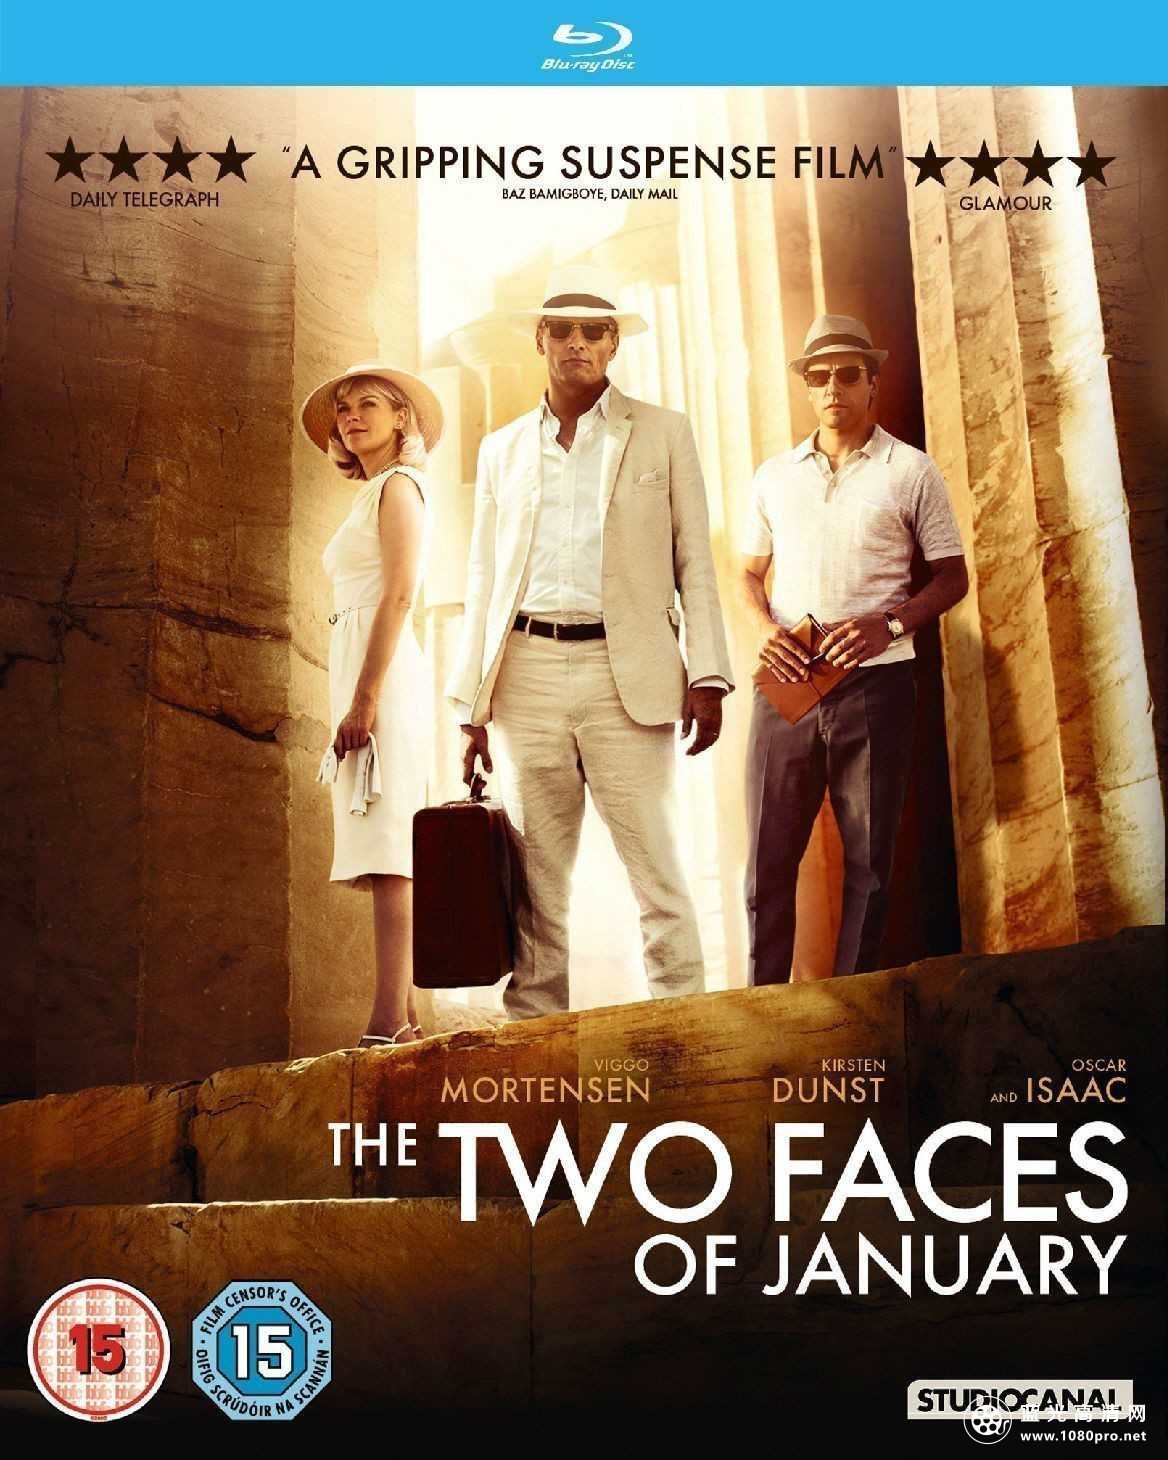 一月迷情/蜜月杀机 The.Two.Faces.of.January.2014.LIMITED.720p.BluRay.x264-GECKOS 4.36GB-1.jpg